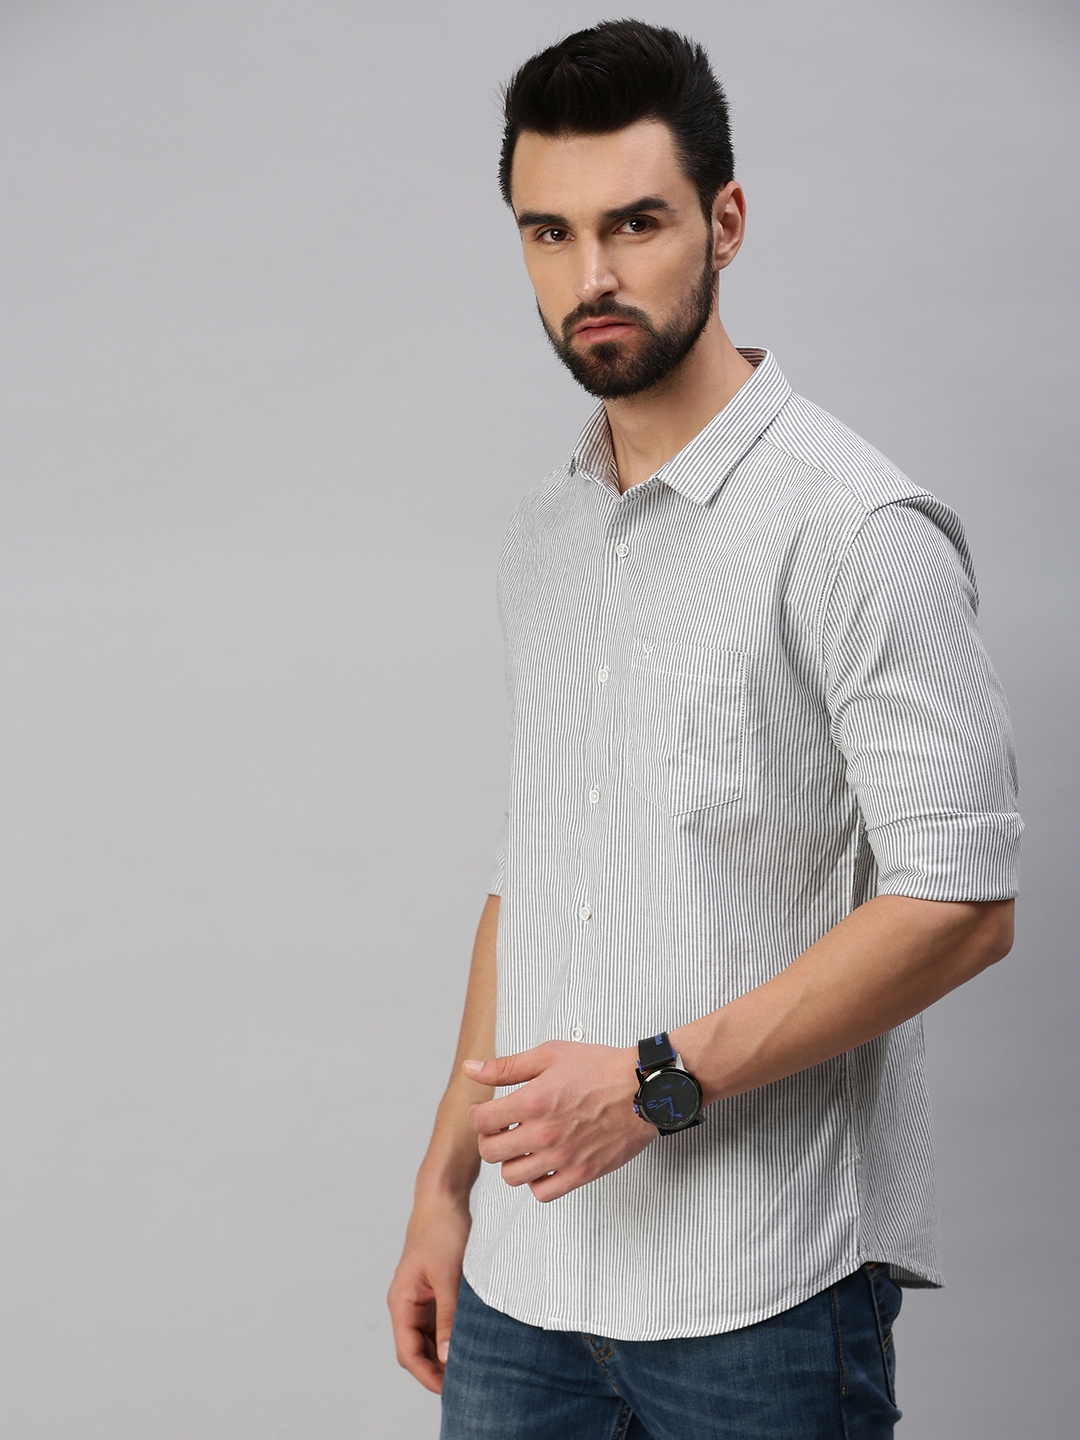 Men's White Cotton Striped Casual Shirts